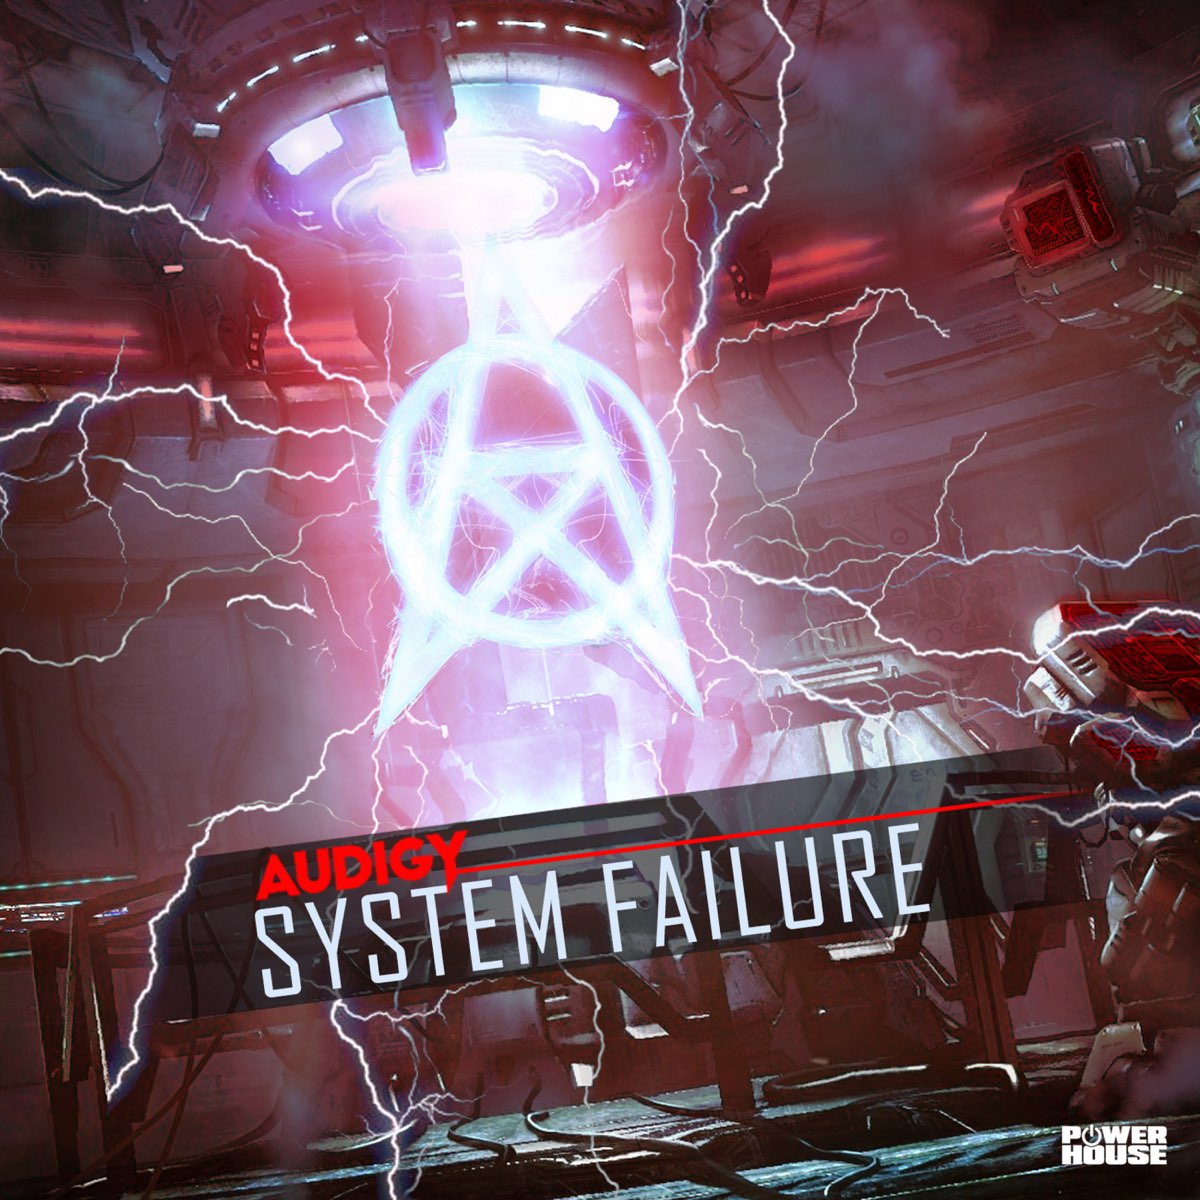 System failure. Your system failed